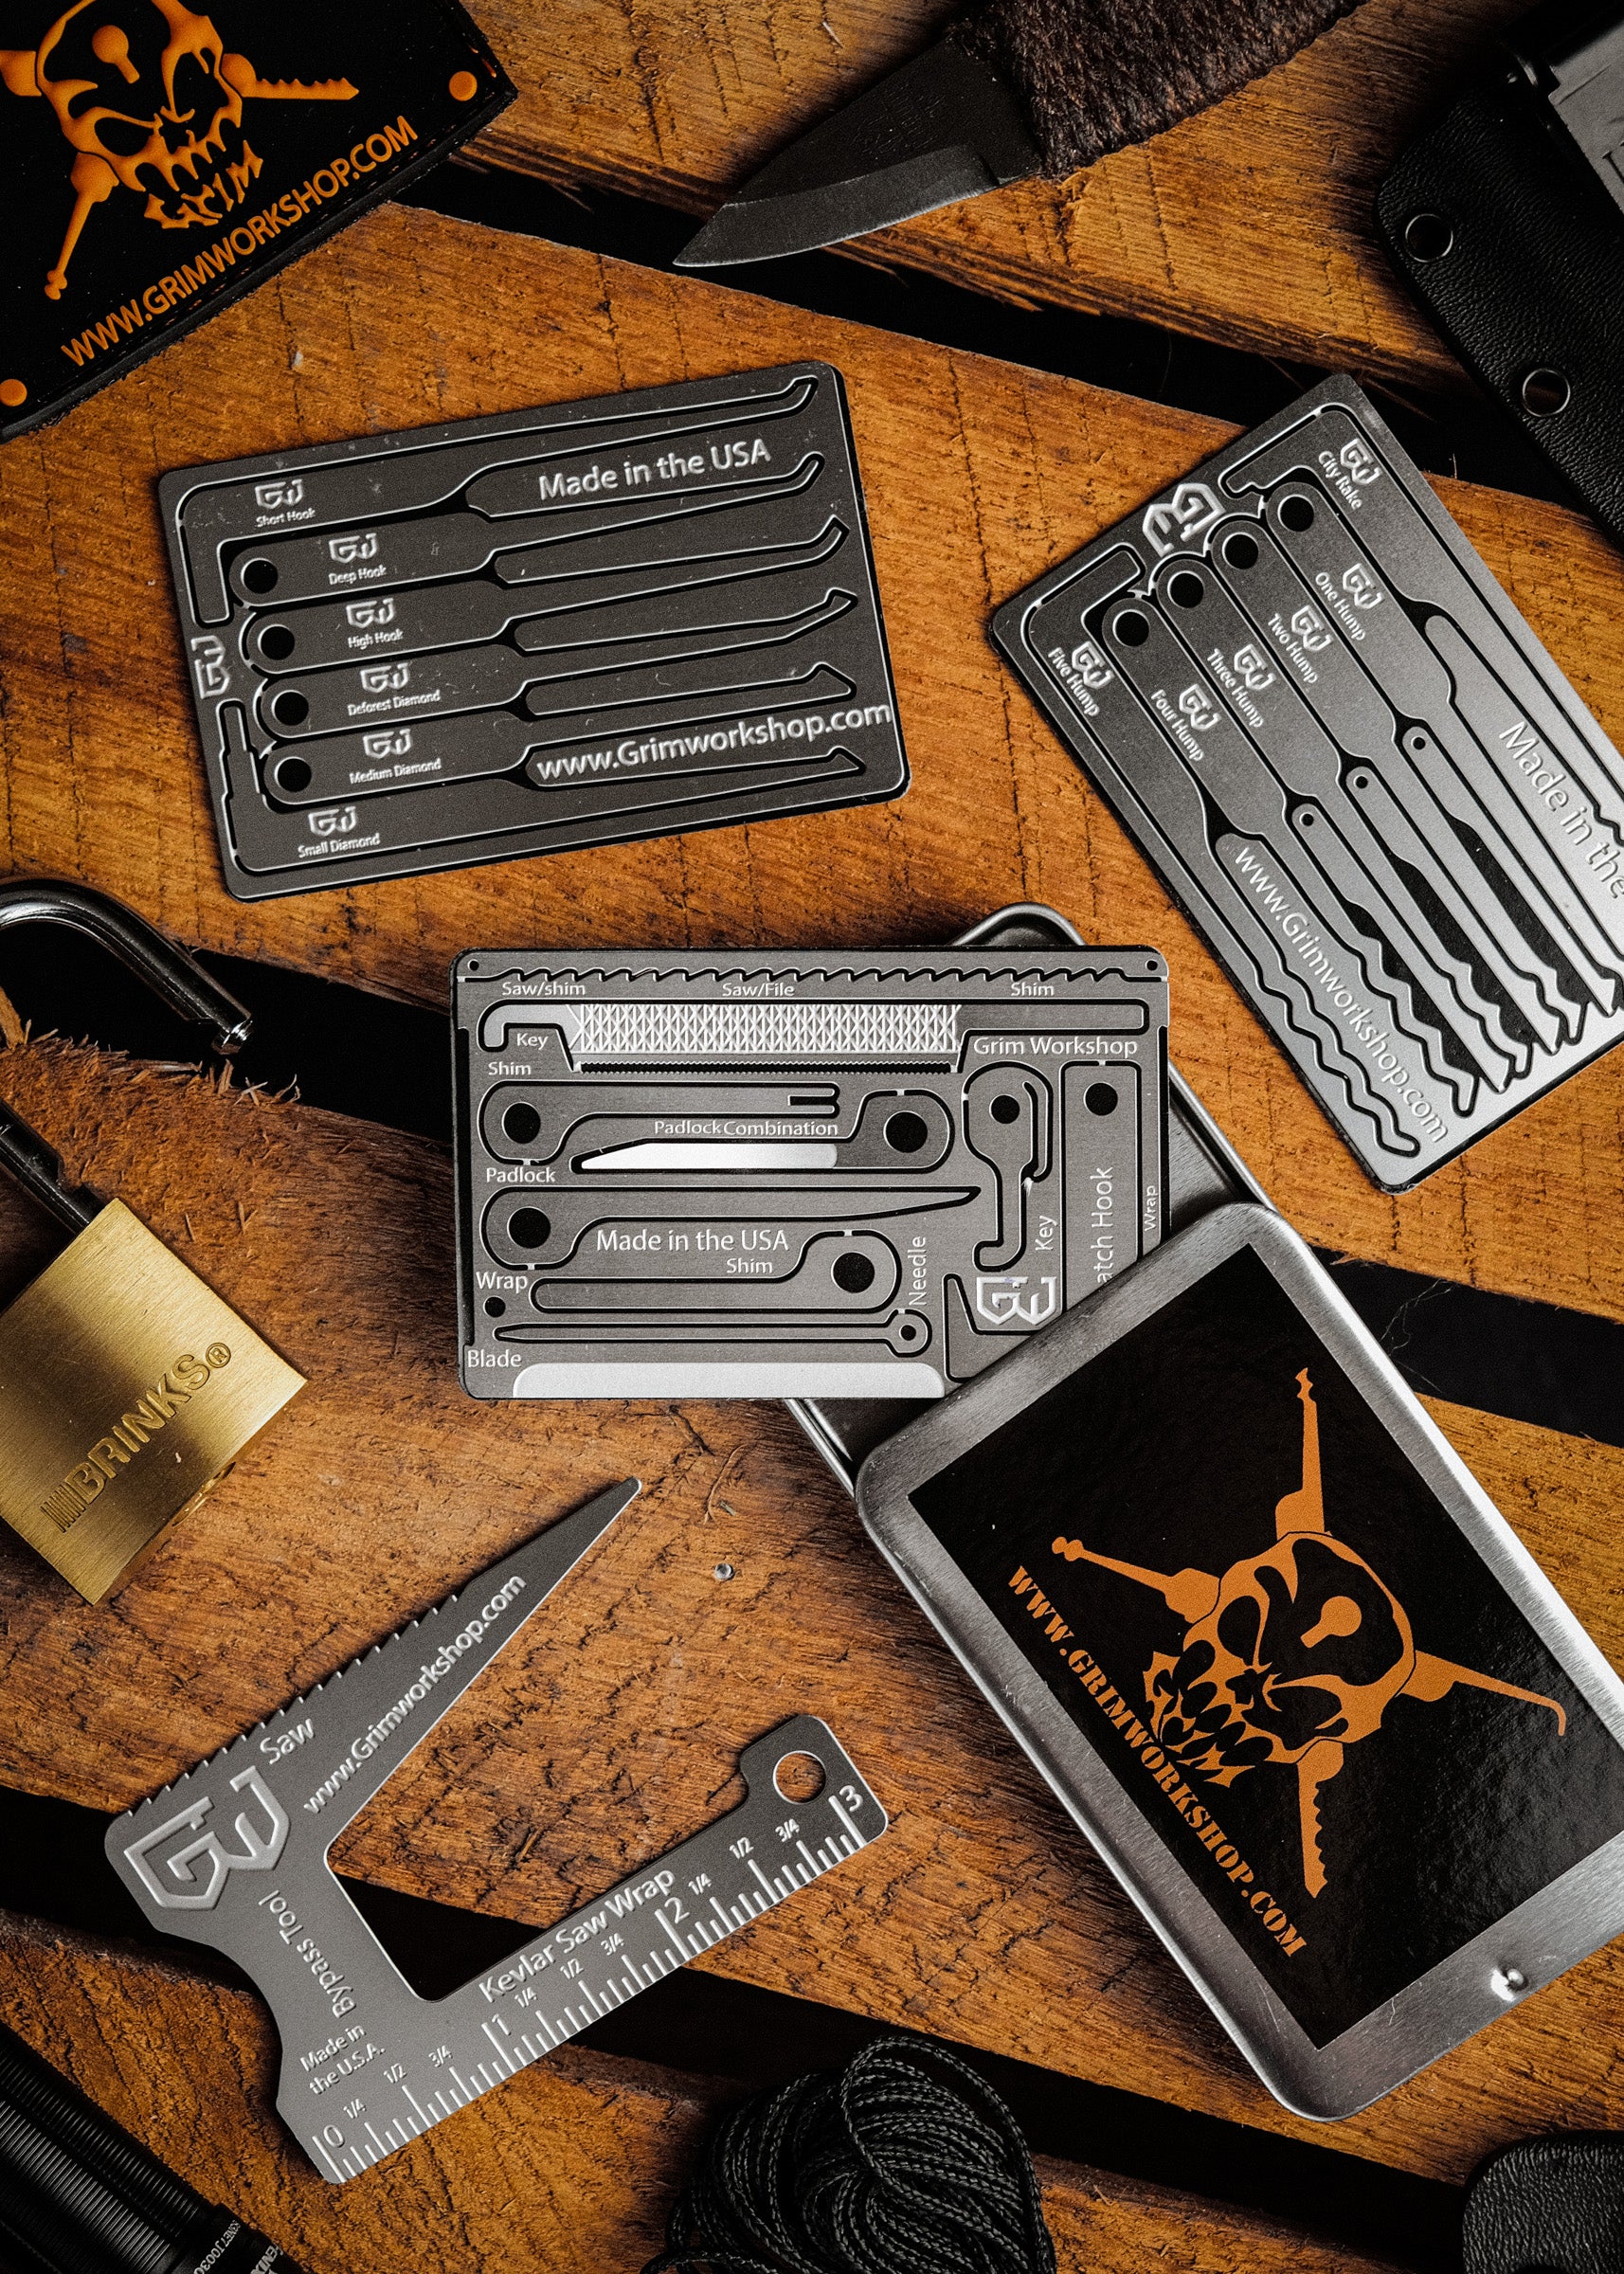 edc sere kit for urban survival credit card lock pick set edc sere kit and escape and evasion kit